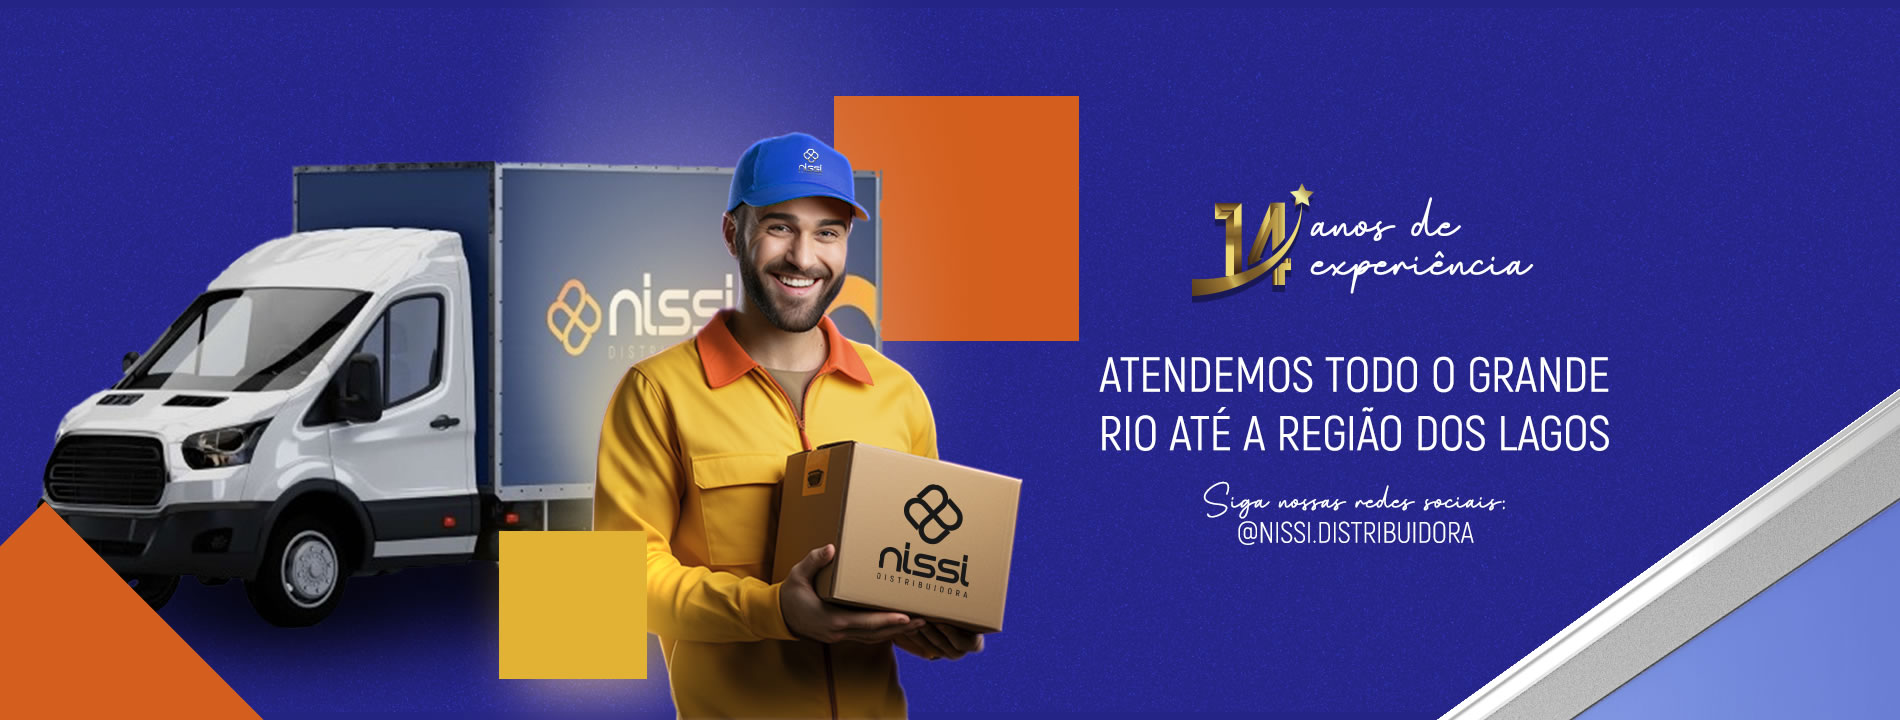 (c) Nissidistribuidora.com.br